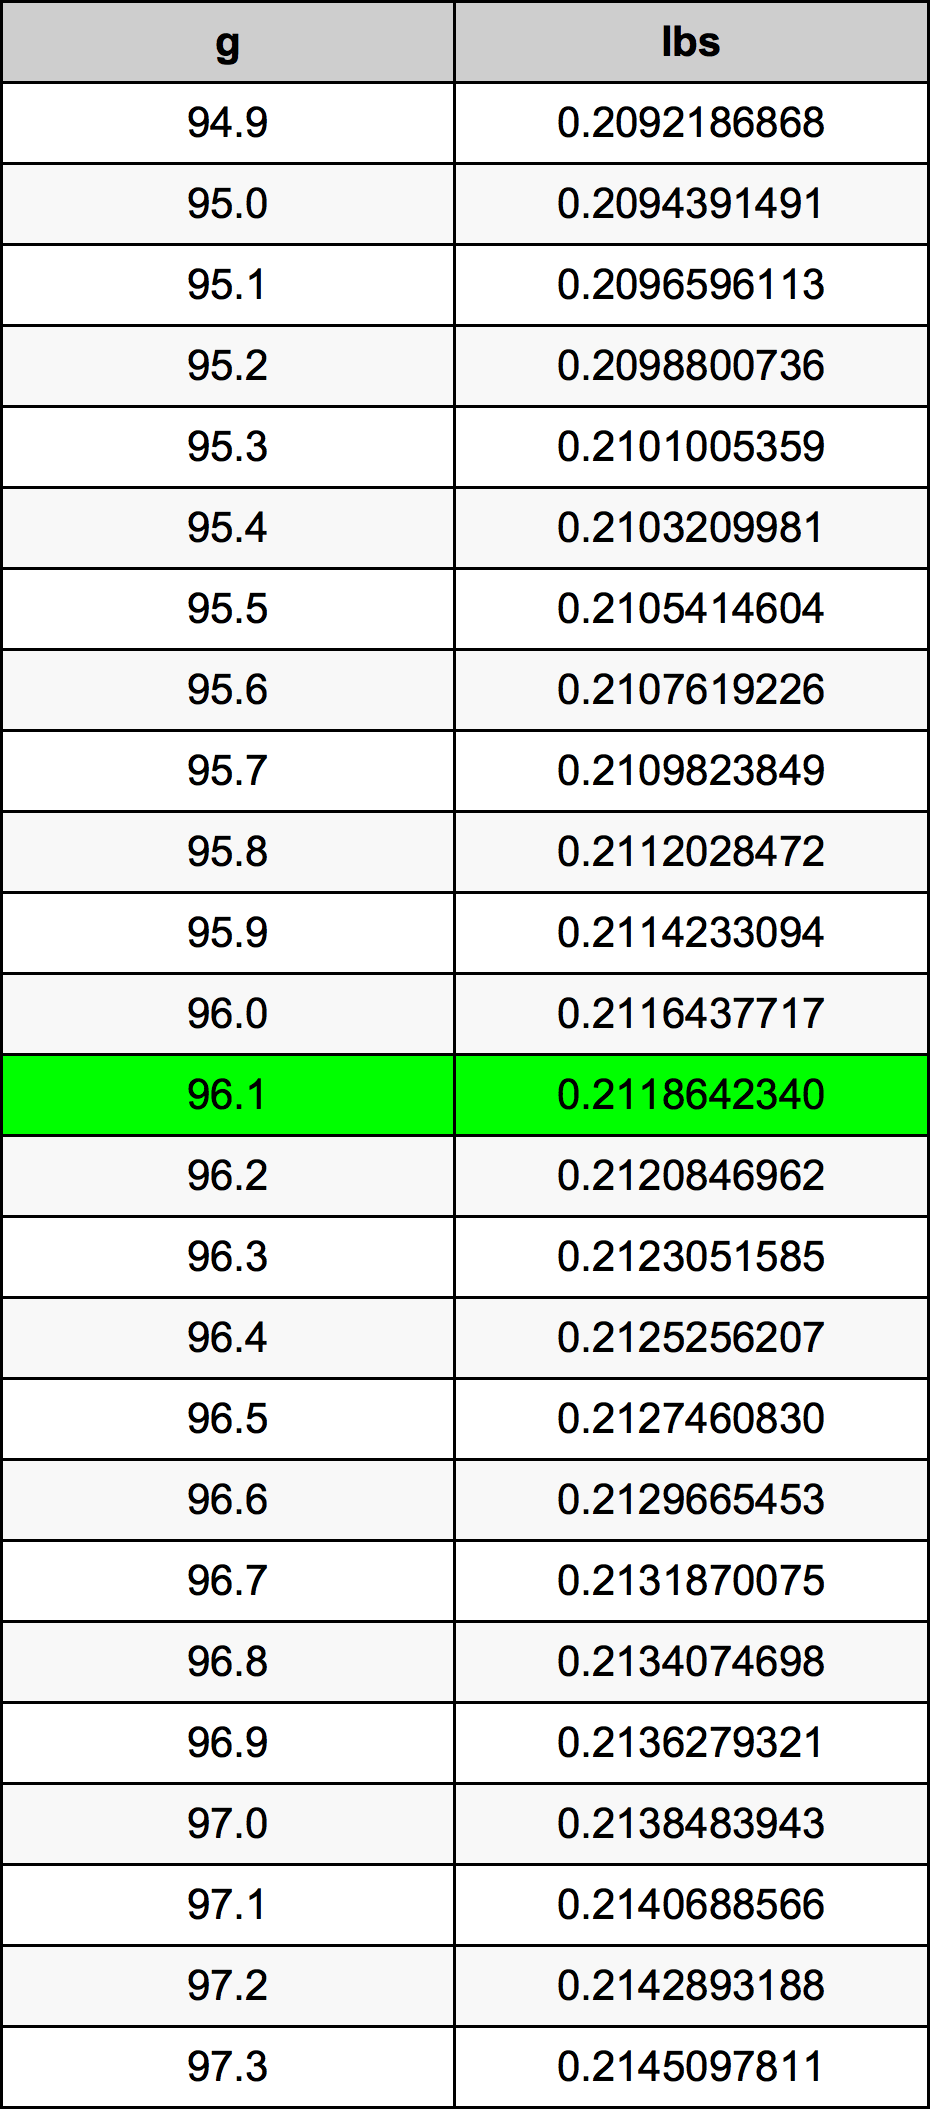 96.1 غرام جدول تحويل